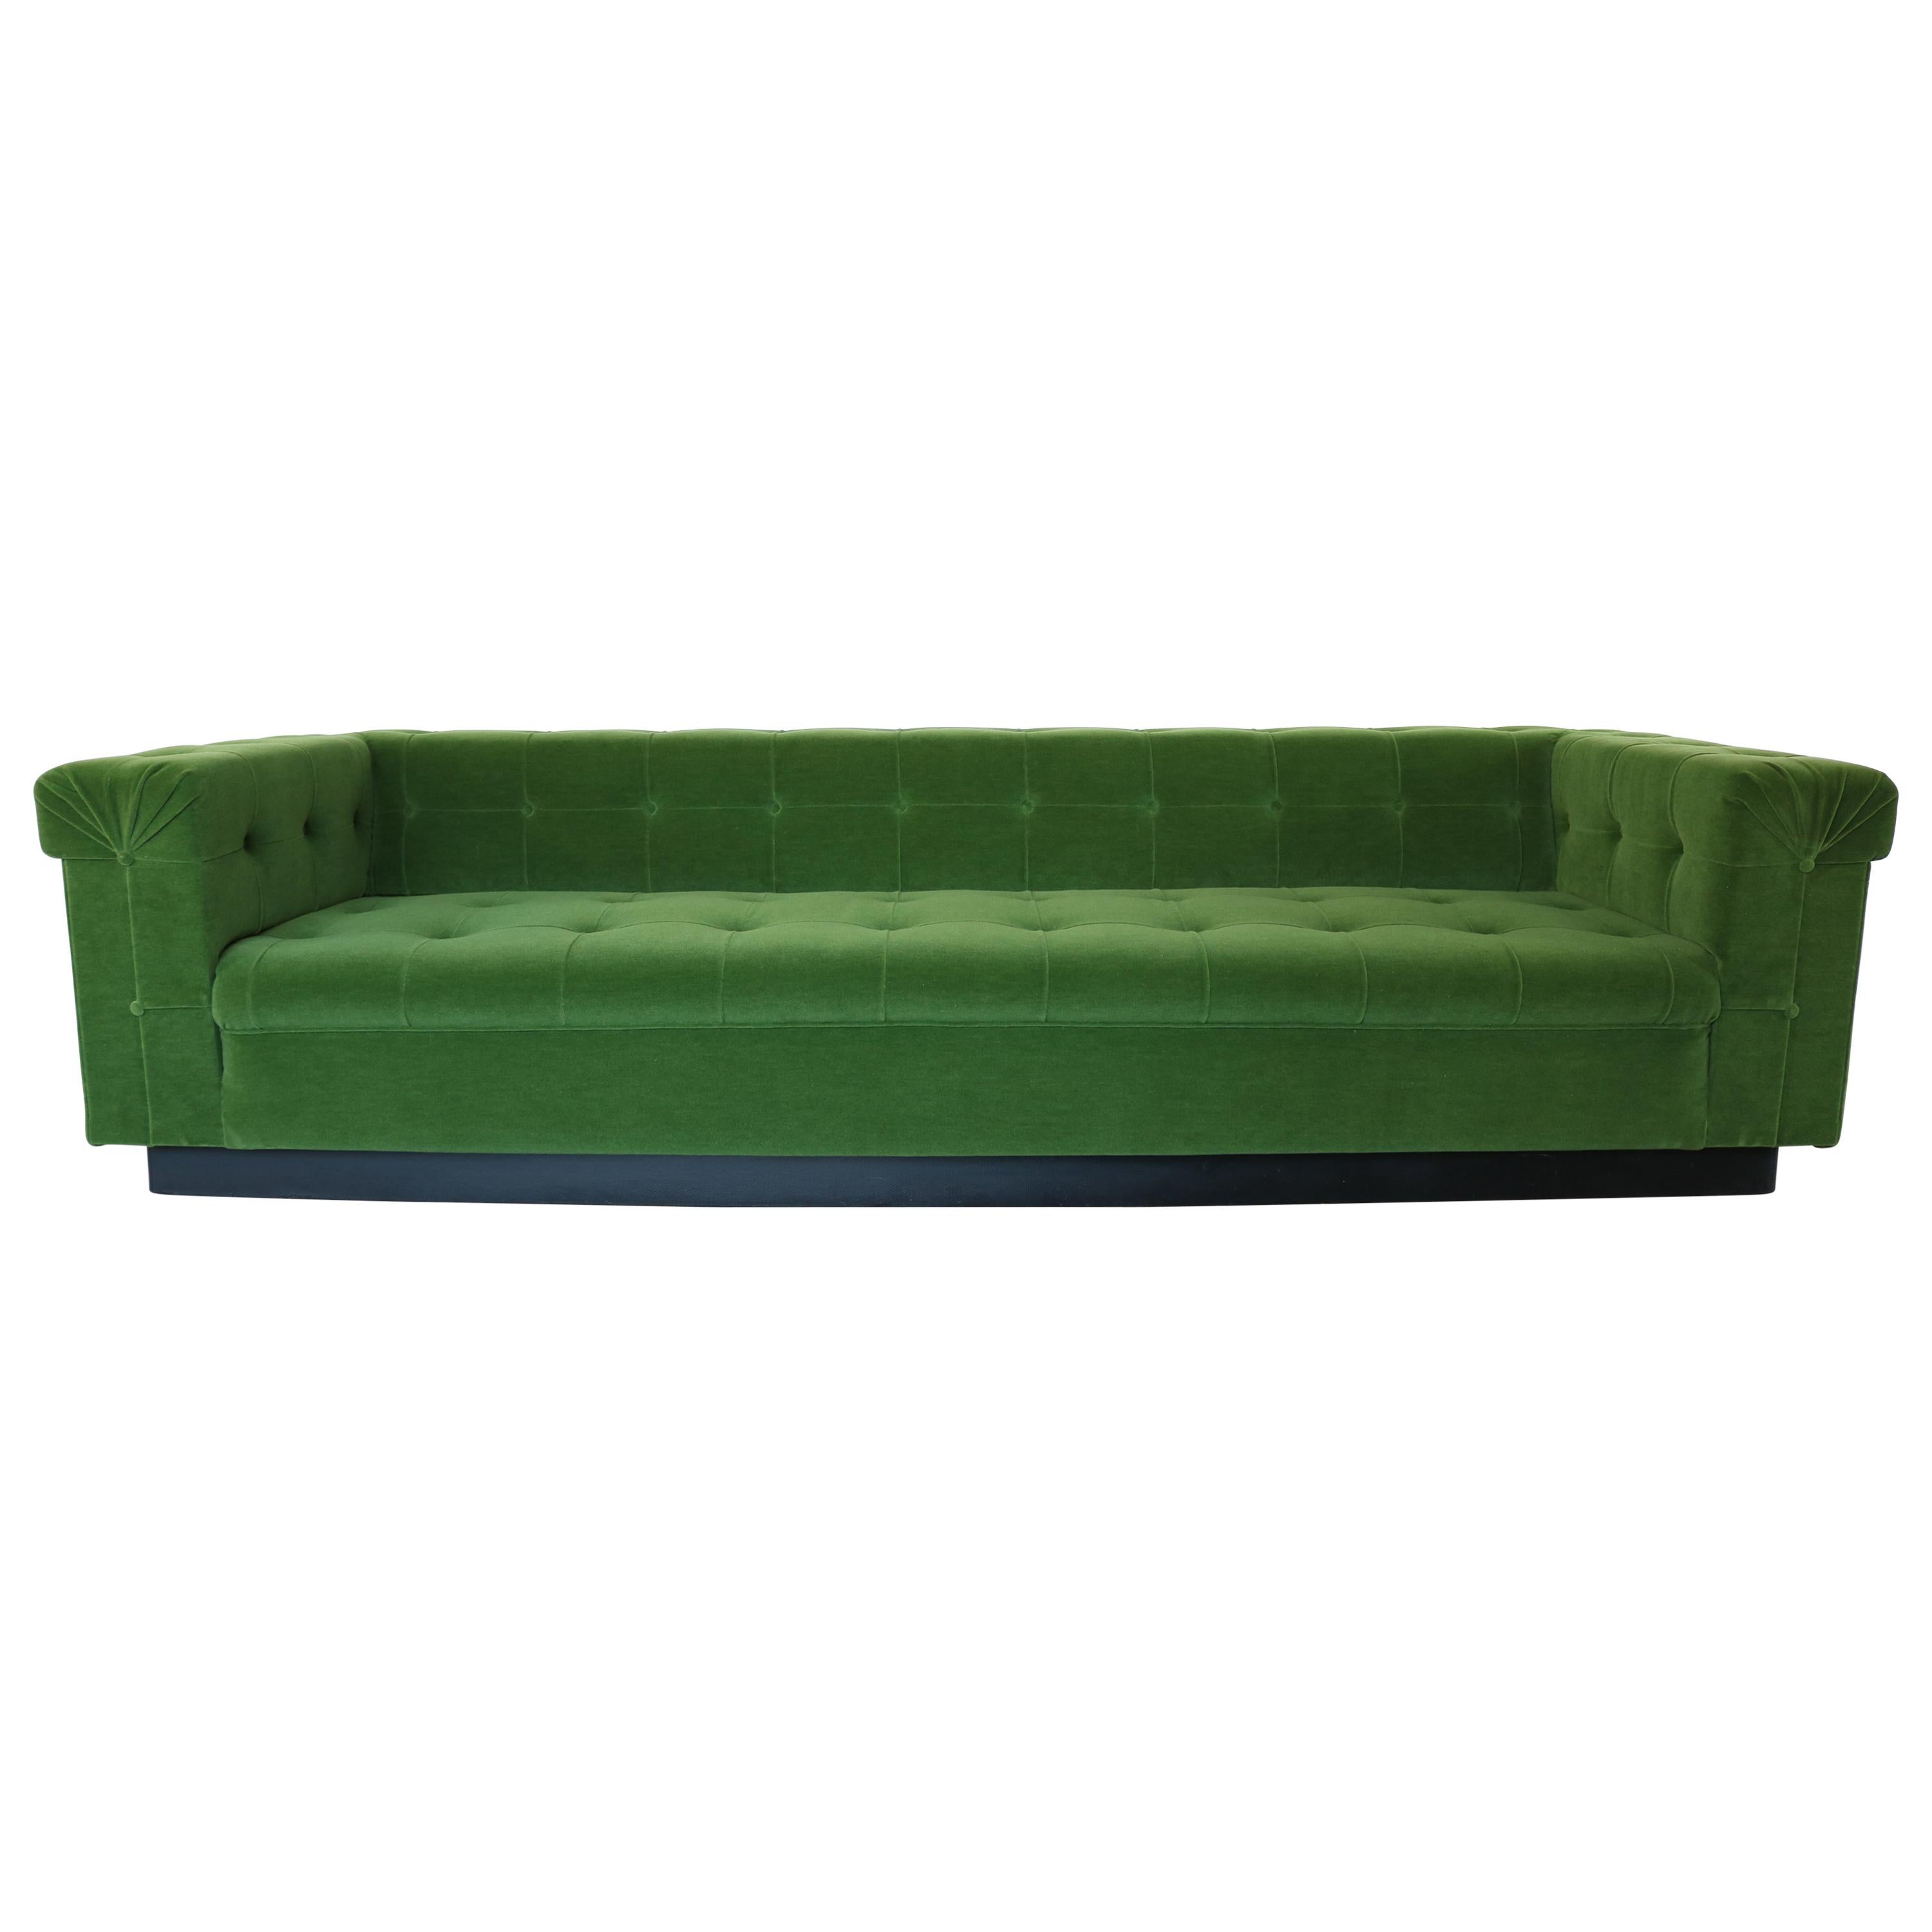 Green Party Sofa by Edward Wormley for Dunbar, 1954